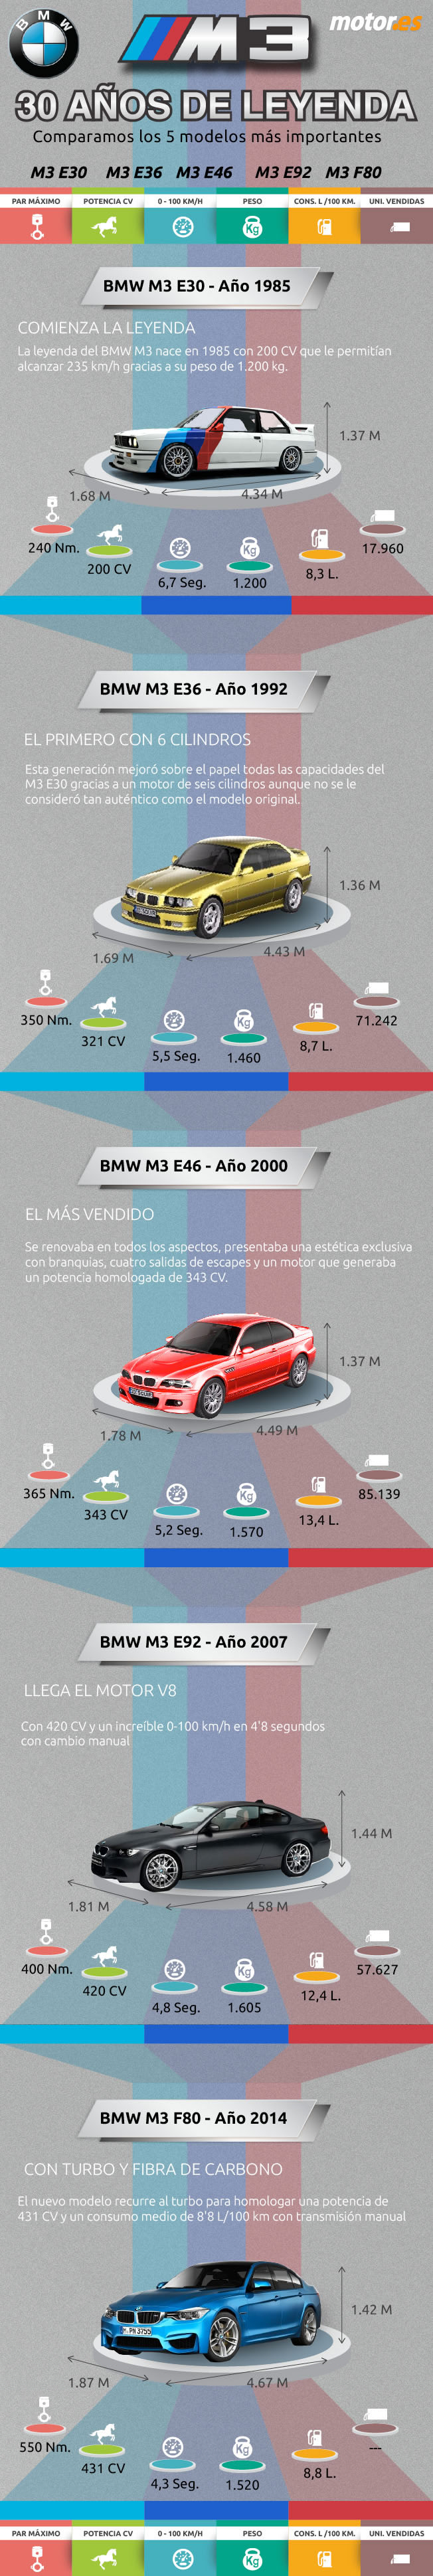 Historia BMW M3